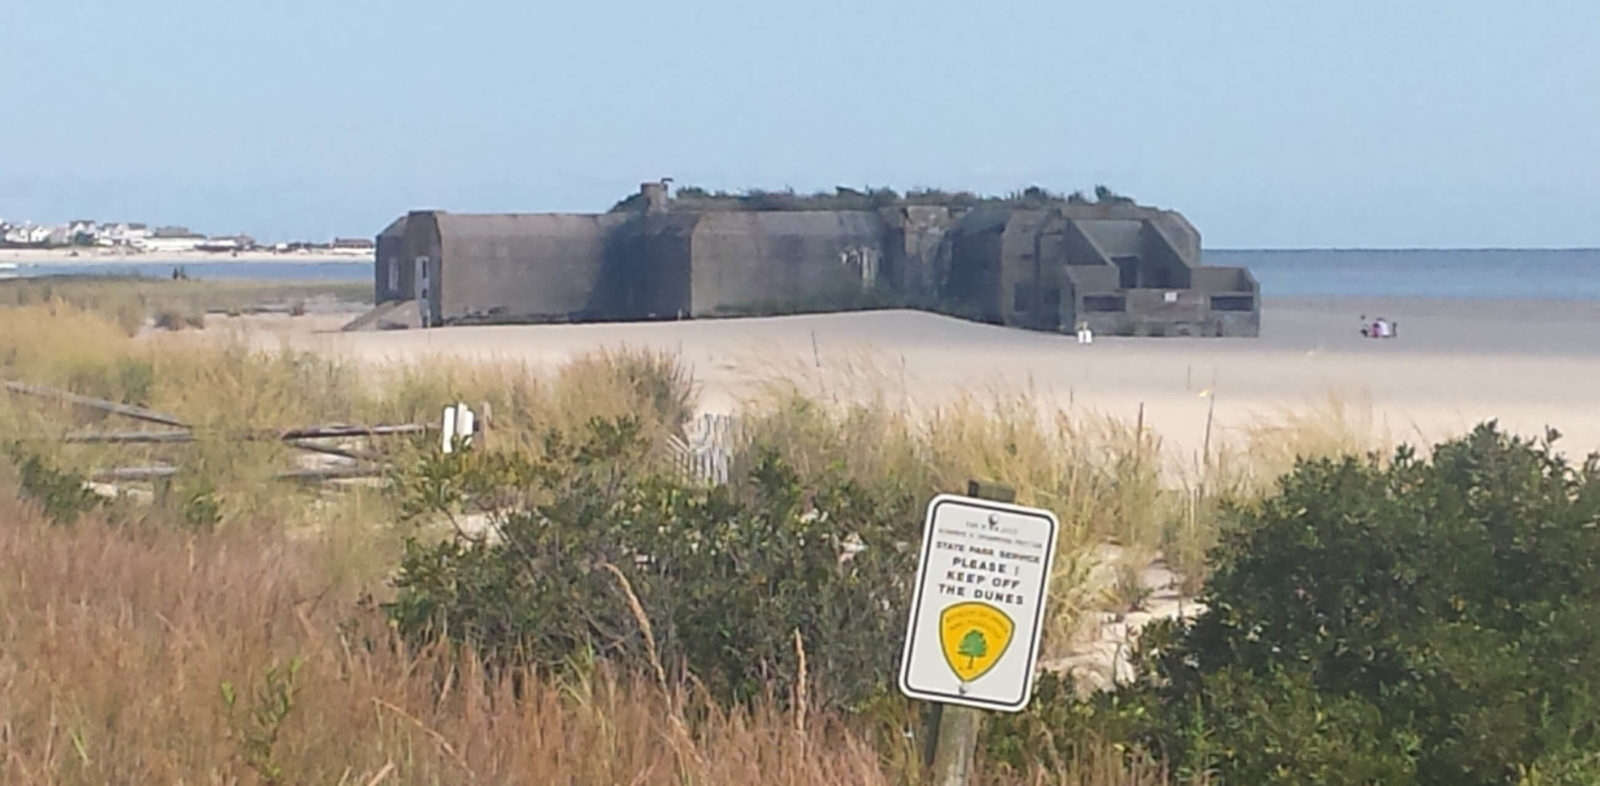 World War II bunker on Cape May beach